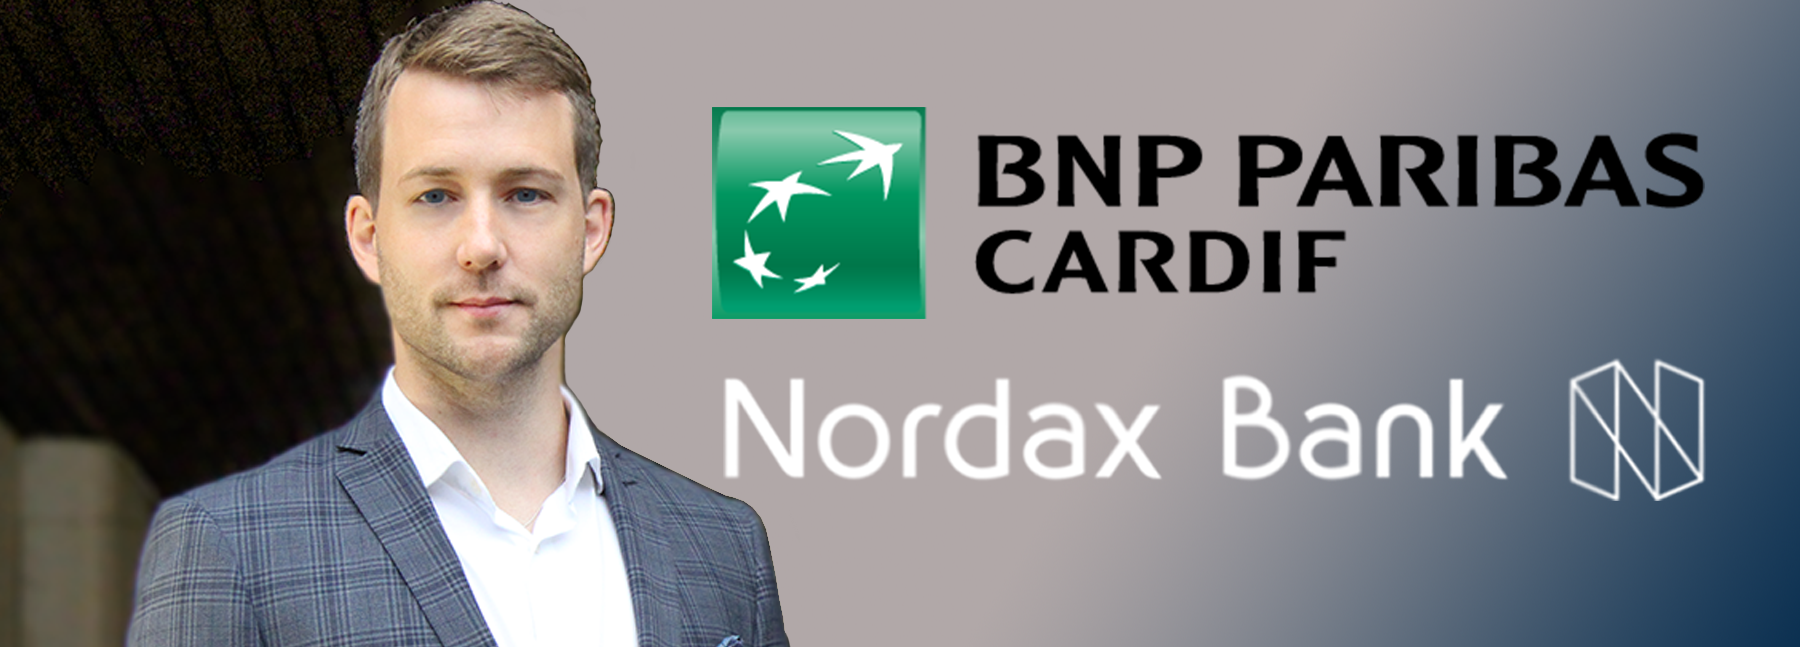 Bernd Hake på Nordax Bank